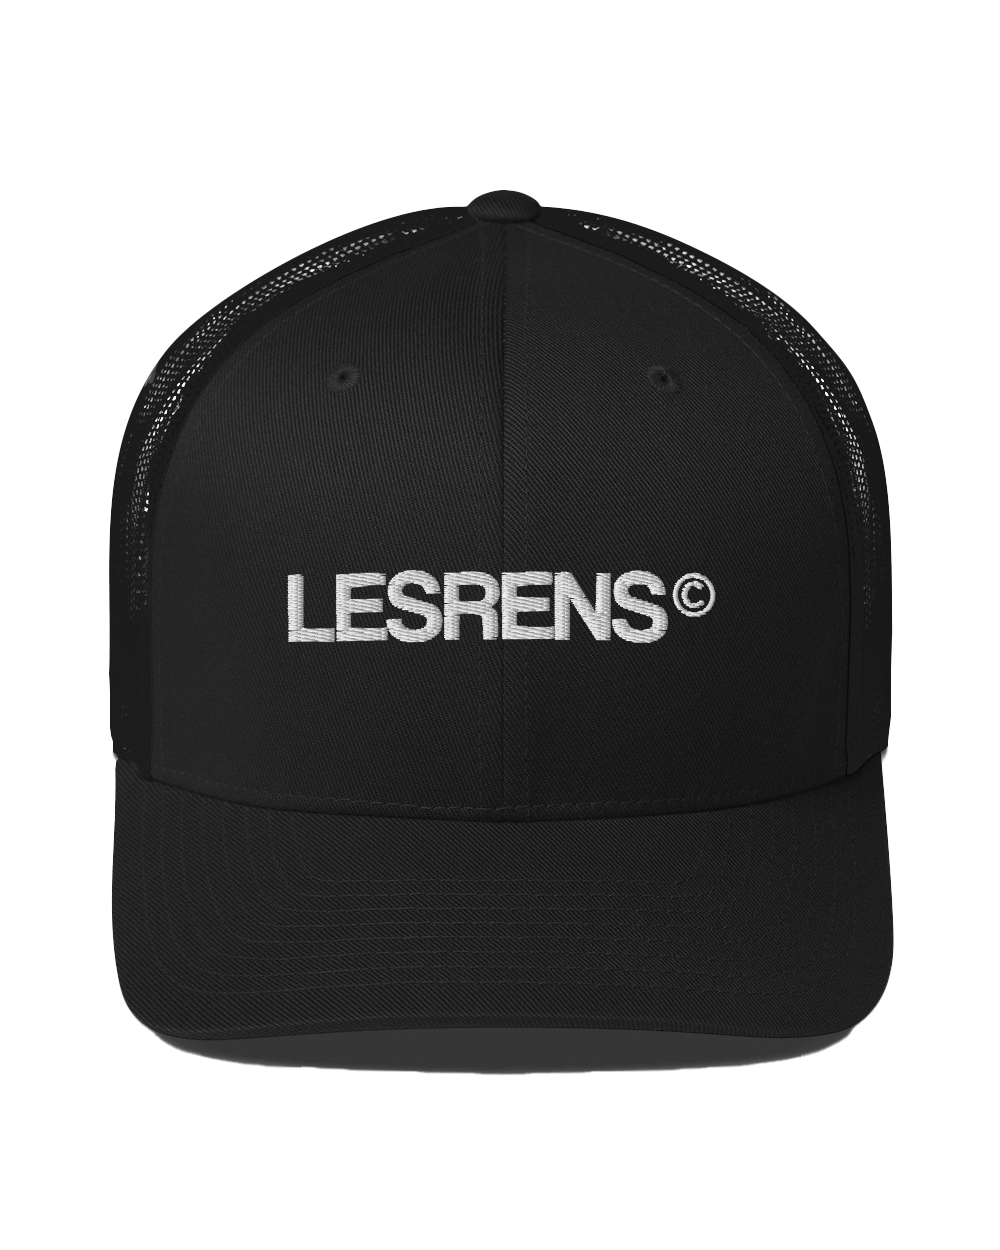 Official Les Rens Trucker Hat